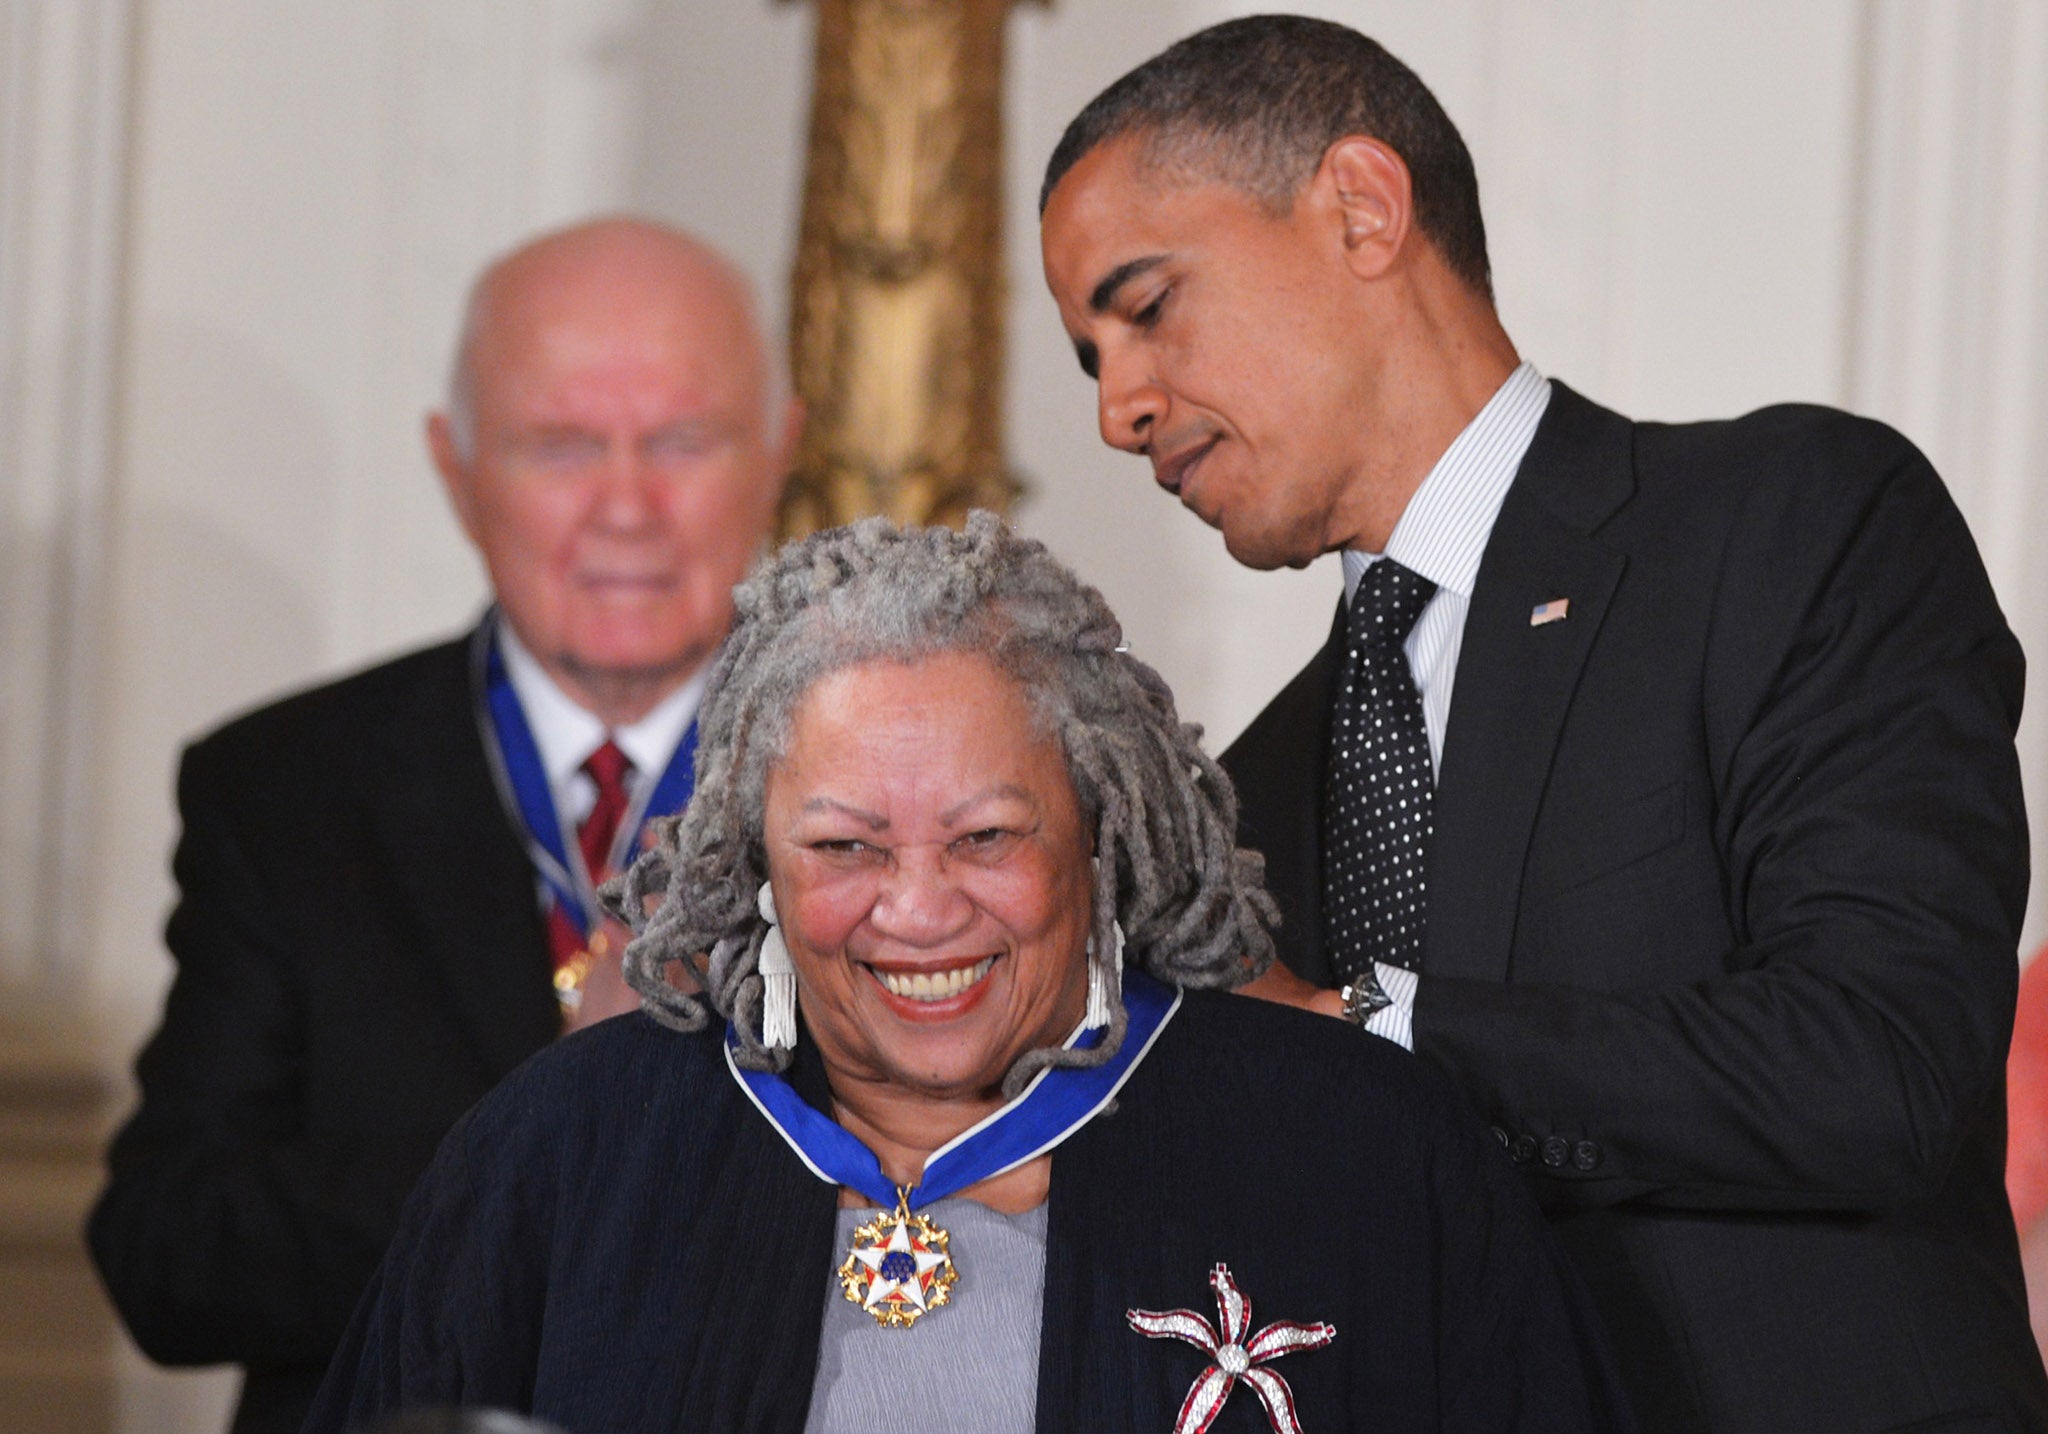 Morrison receives the presidential medal of freedom from US president Barack Obama in 2012